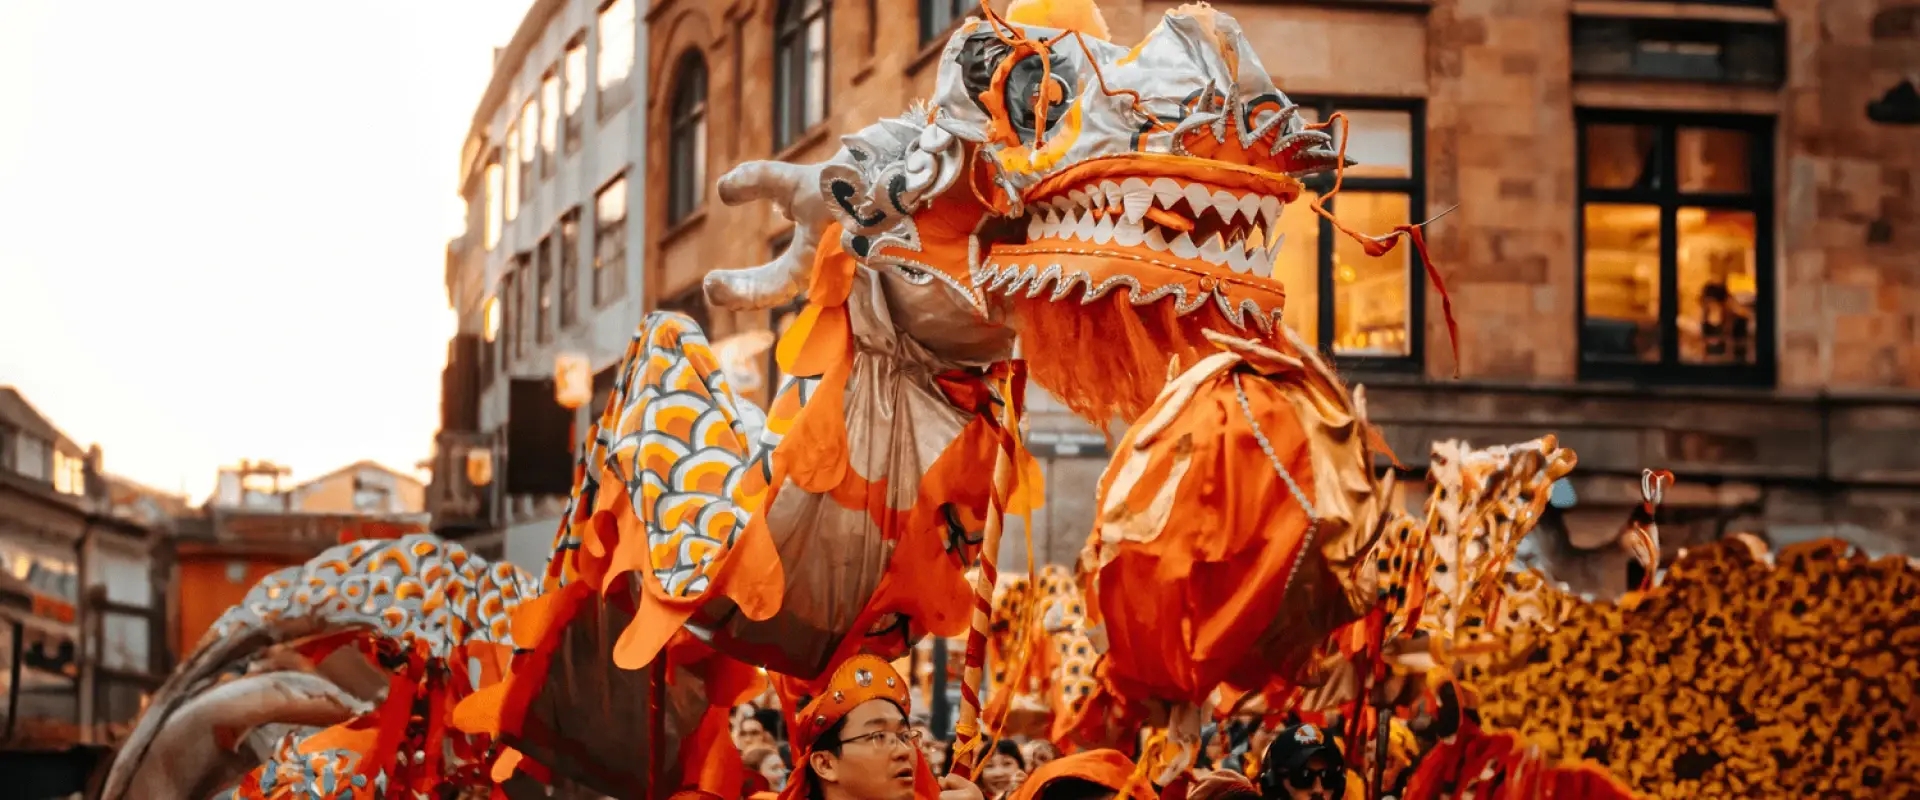 Chinese New Year parade